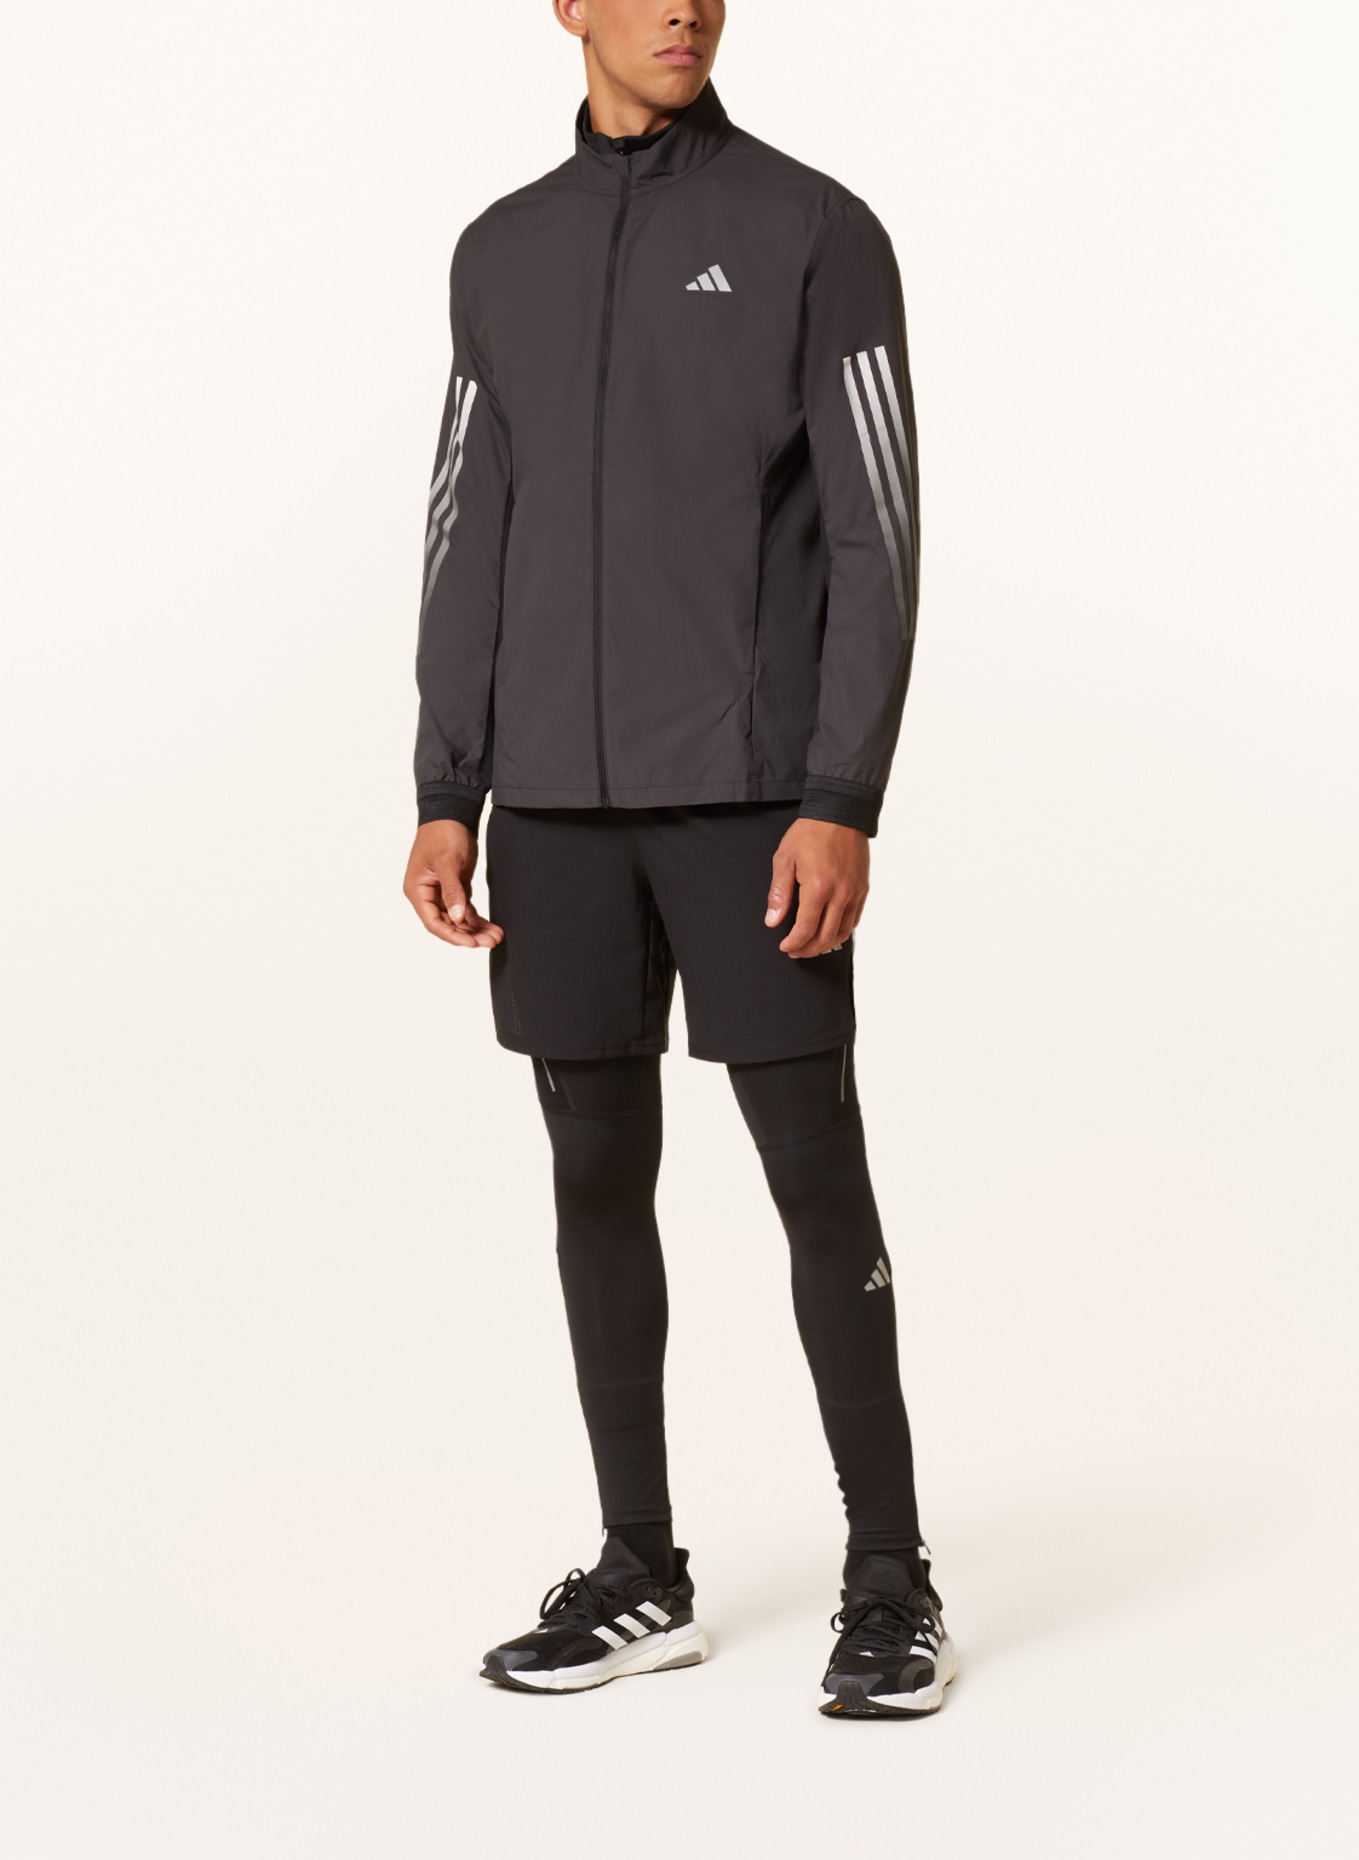 adidas Ultimate Running Conquer the Elements AEROREADY Warming Leggings -  Black, Men's Running